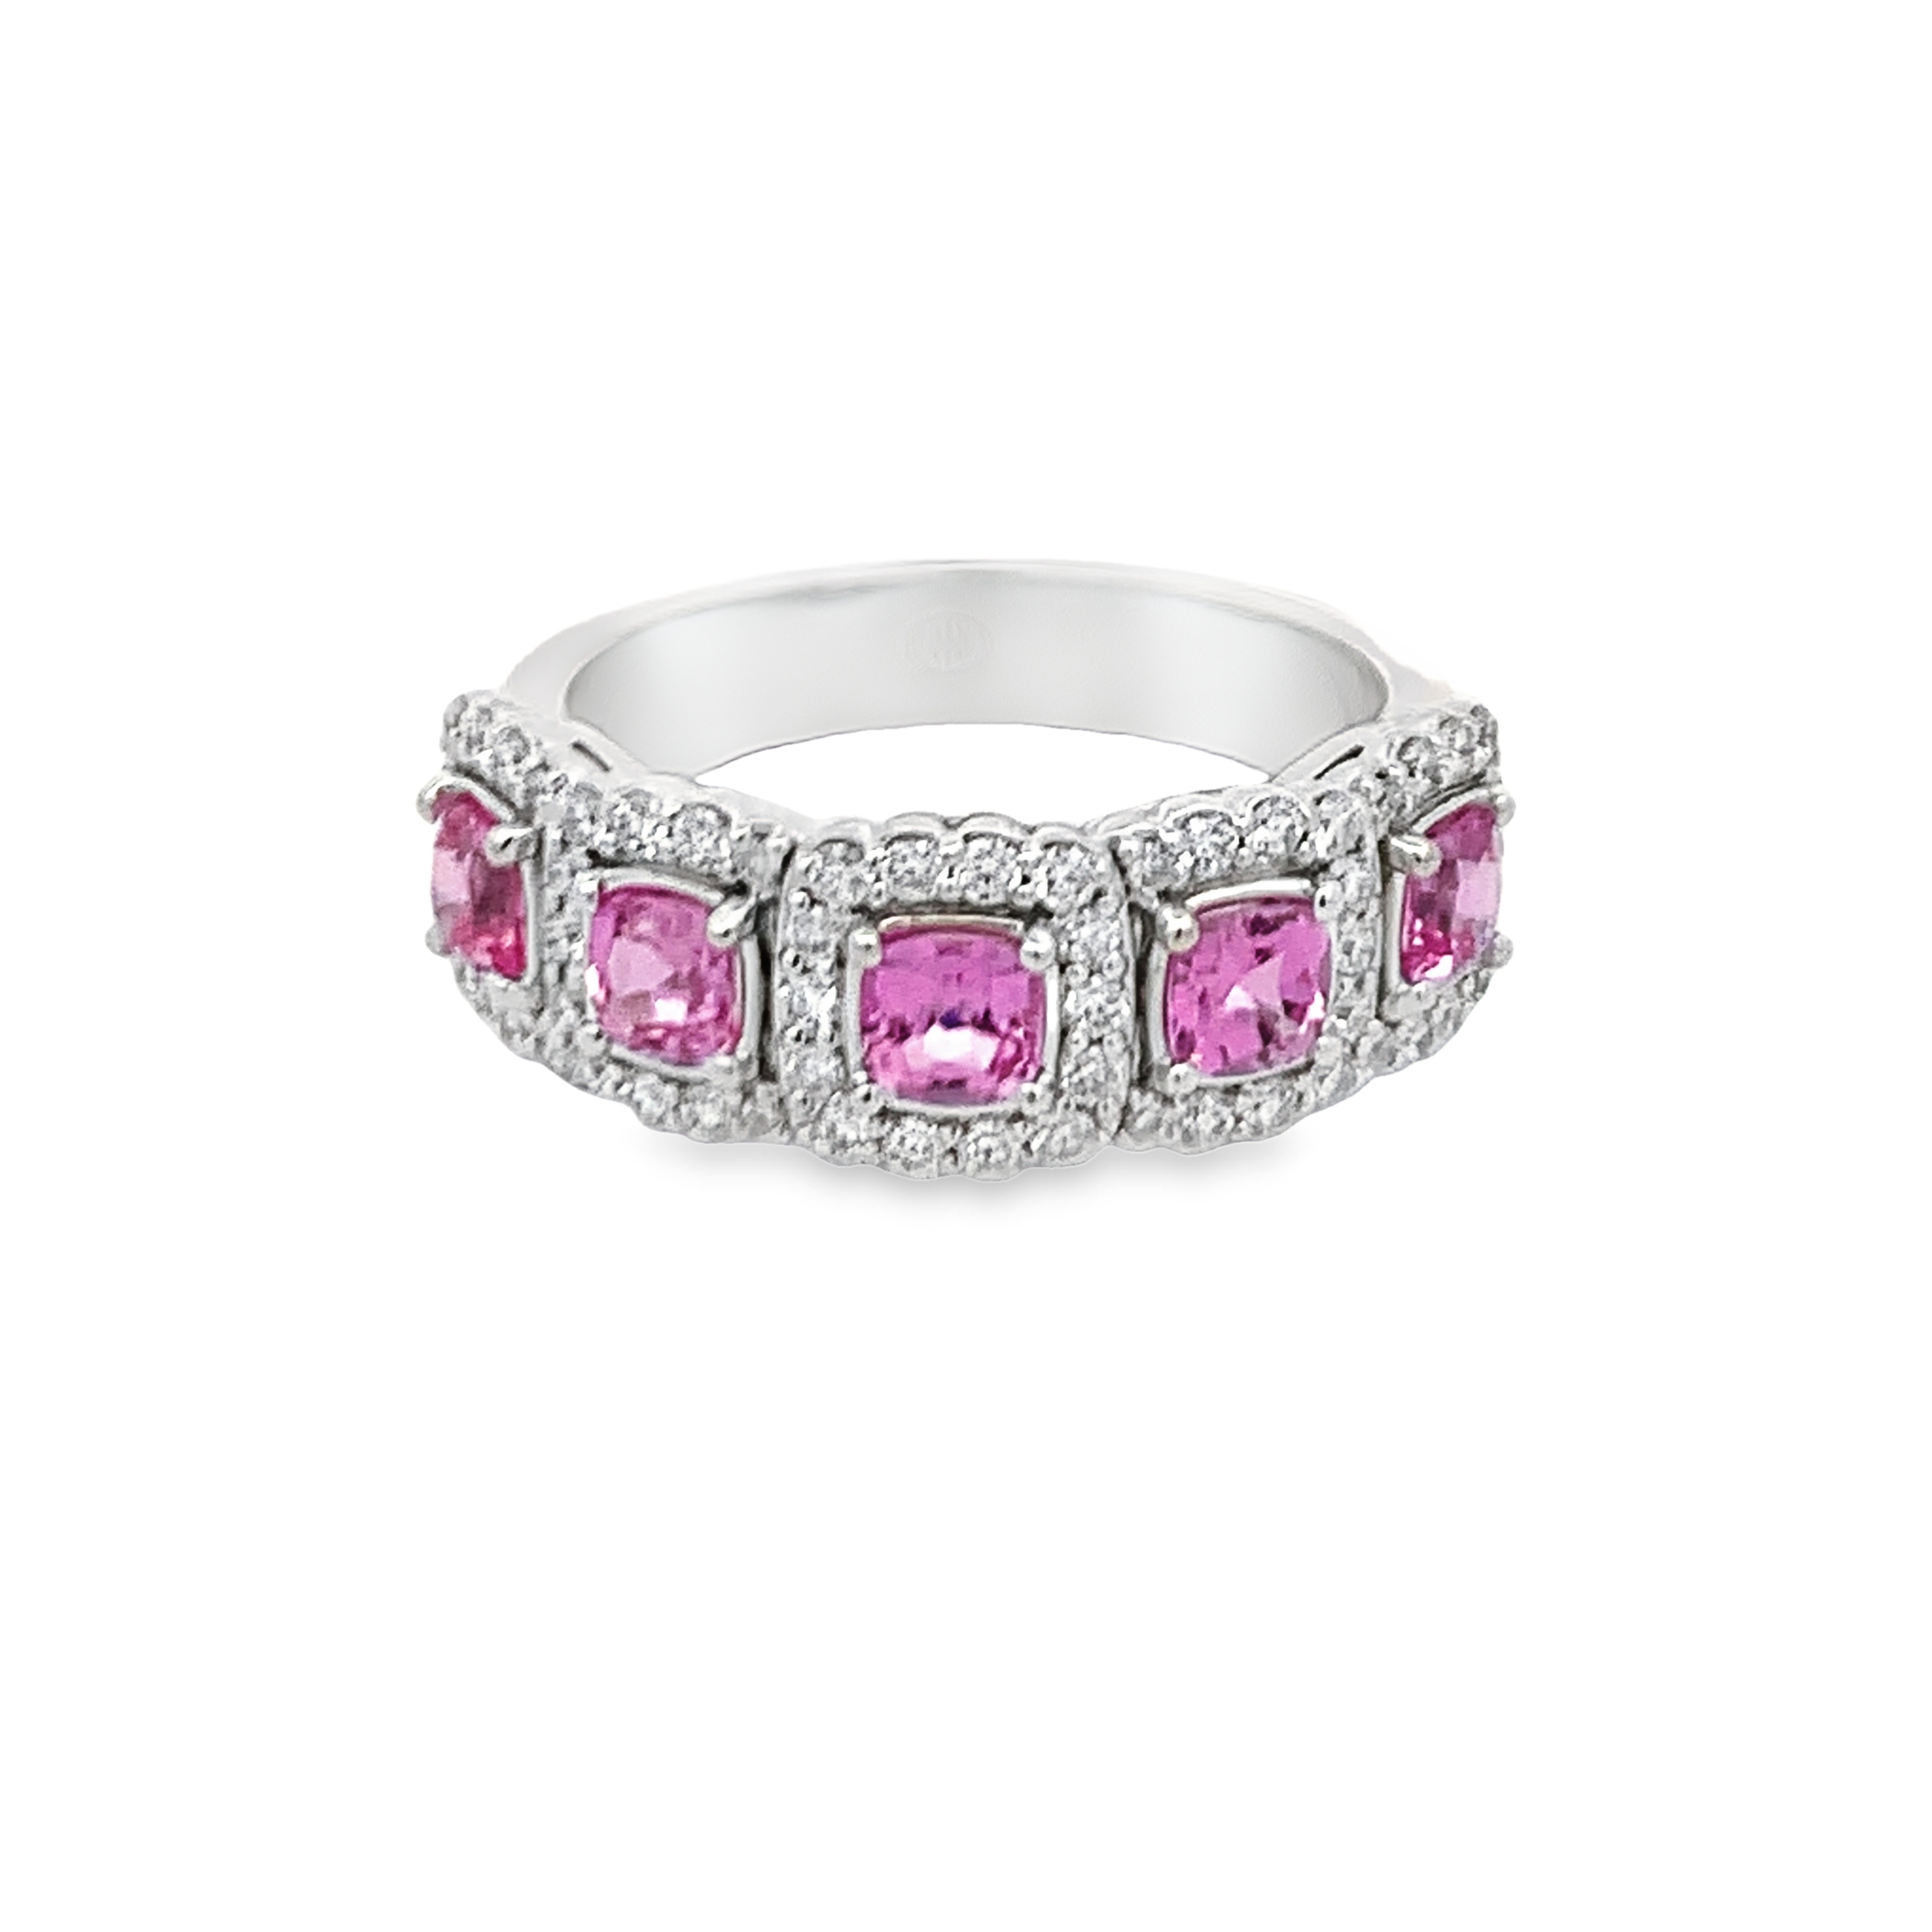 Christopher Designs 14K White Gold Pink Sapphire Half Anniversary Ring